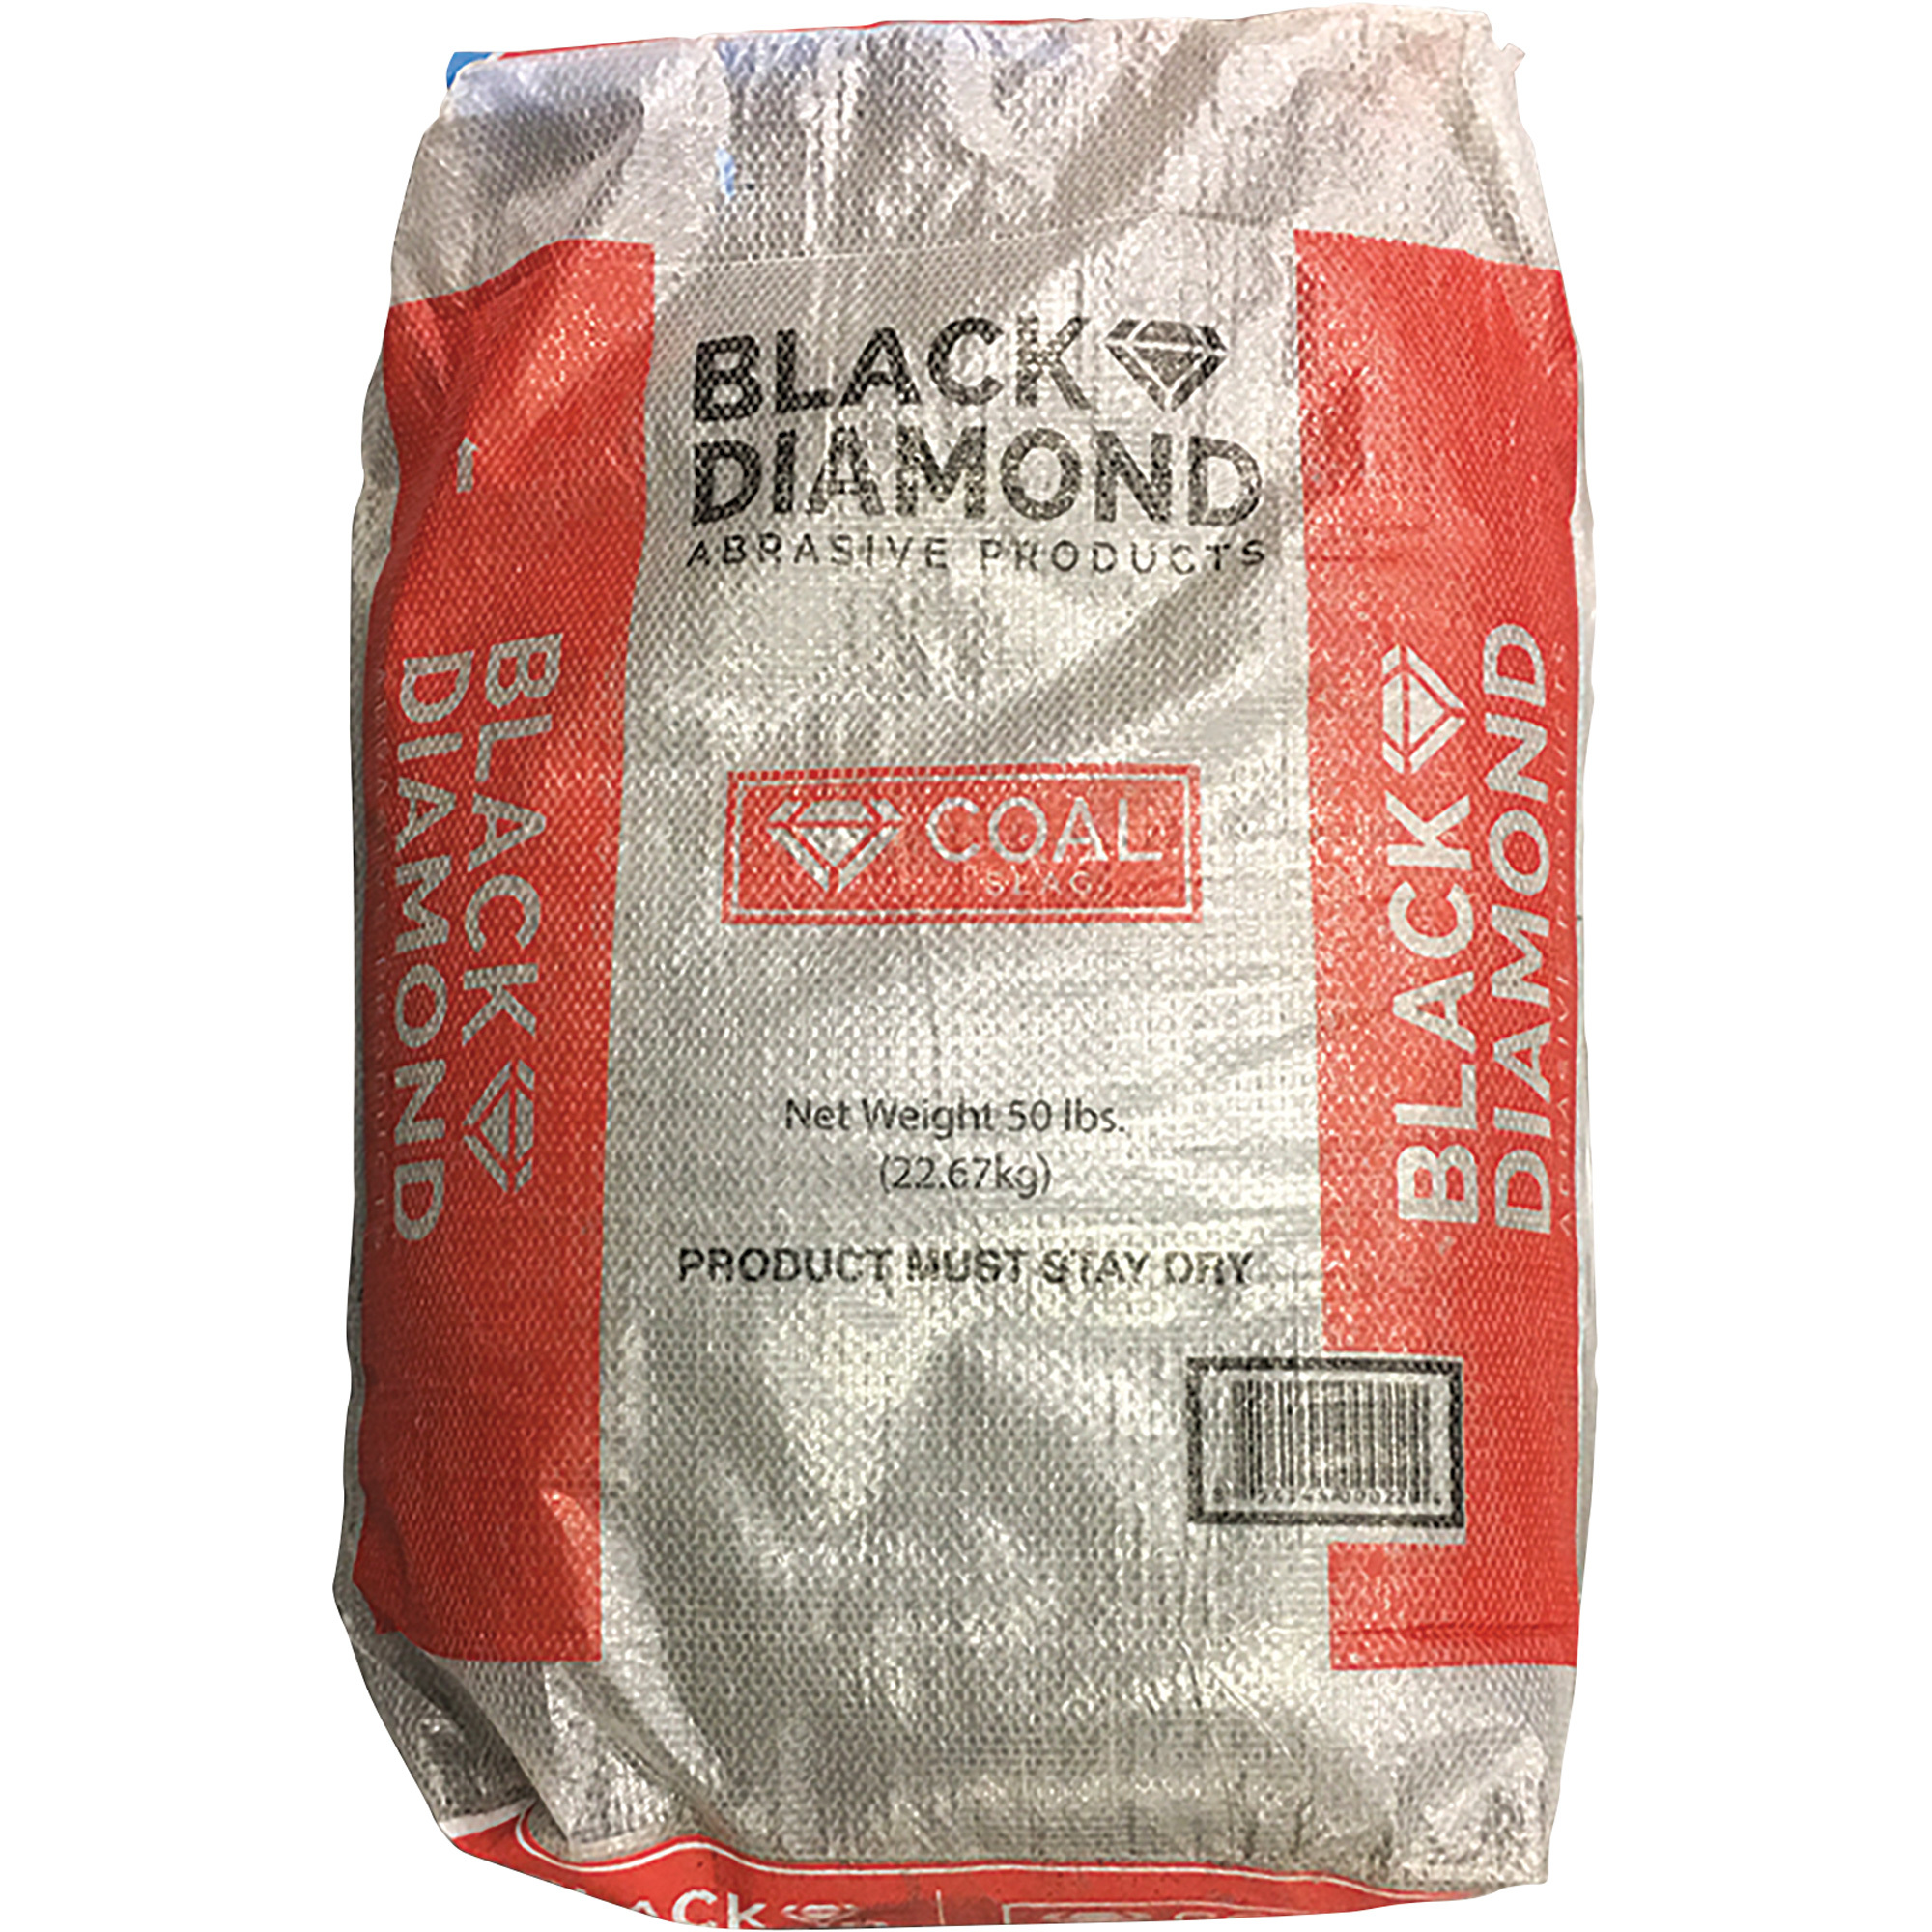 Black Diamond Abrasive Blast Media â 50-Lb. Bag